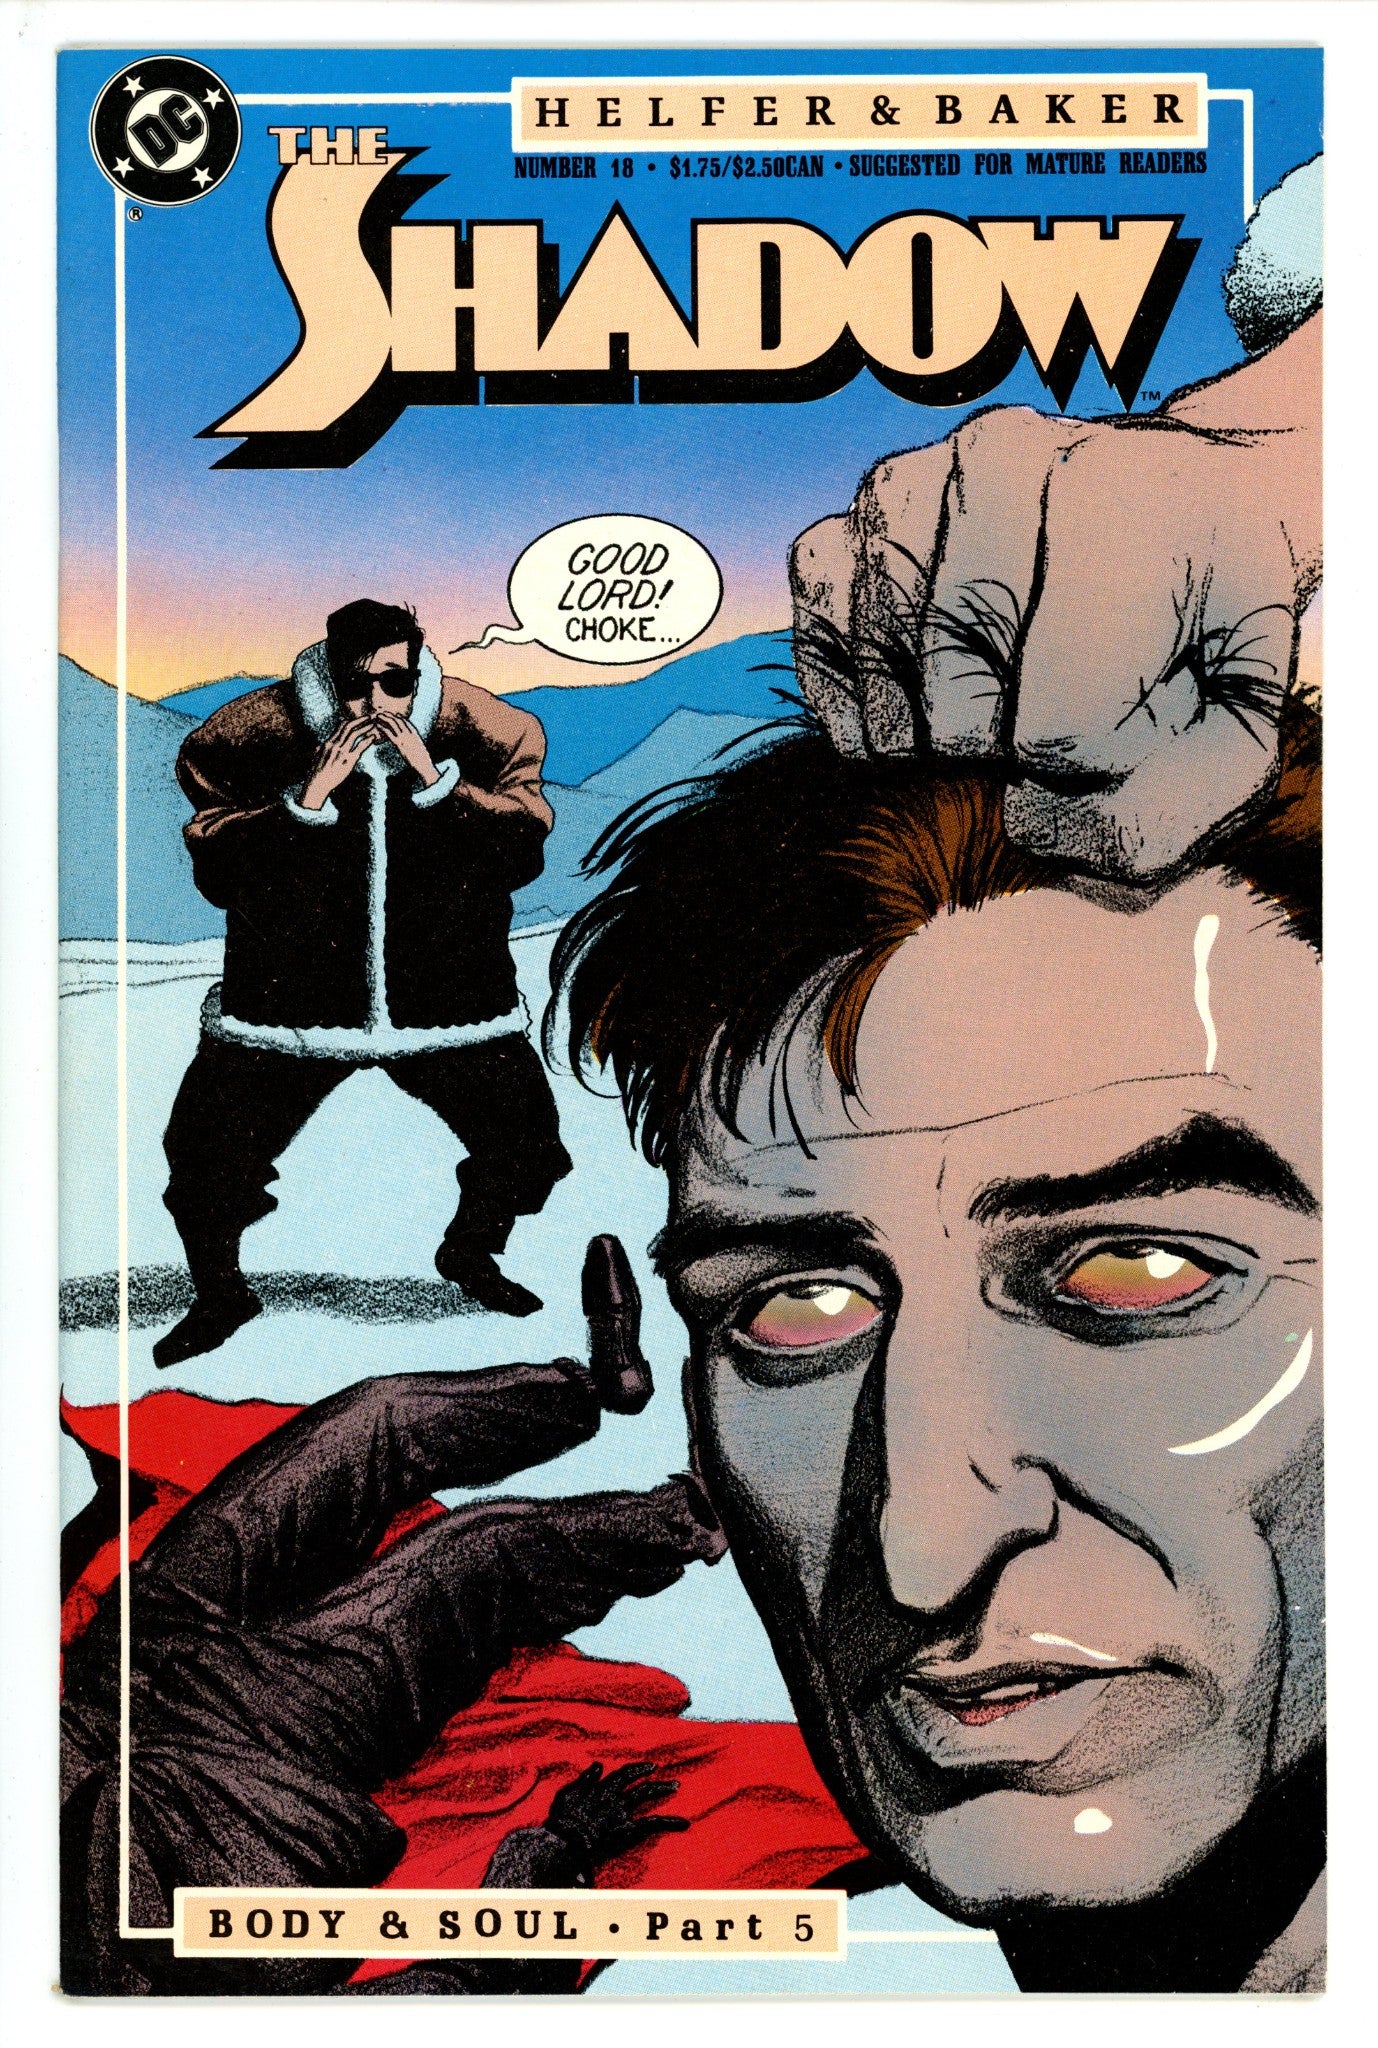 The Shadow Vol 3 18 (1988)